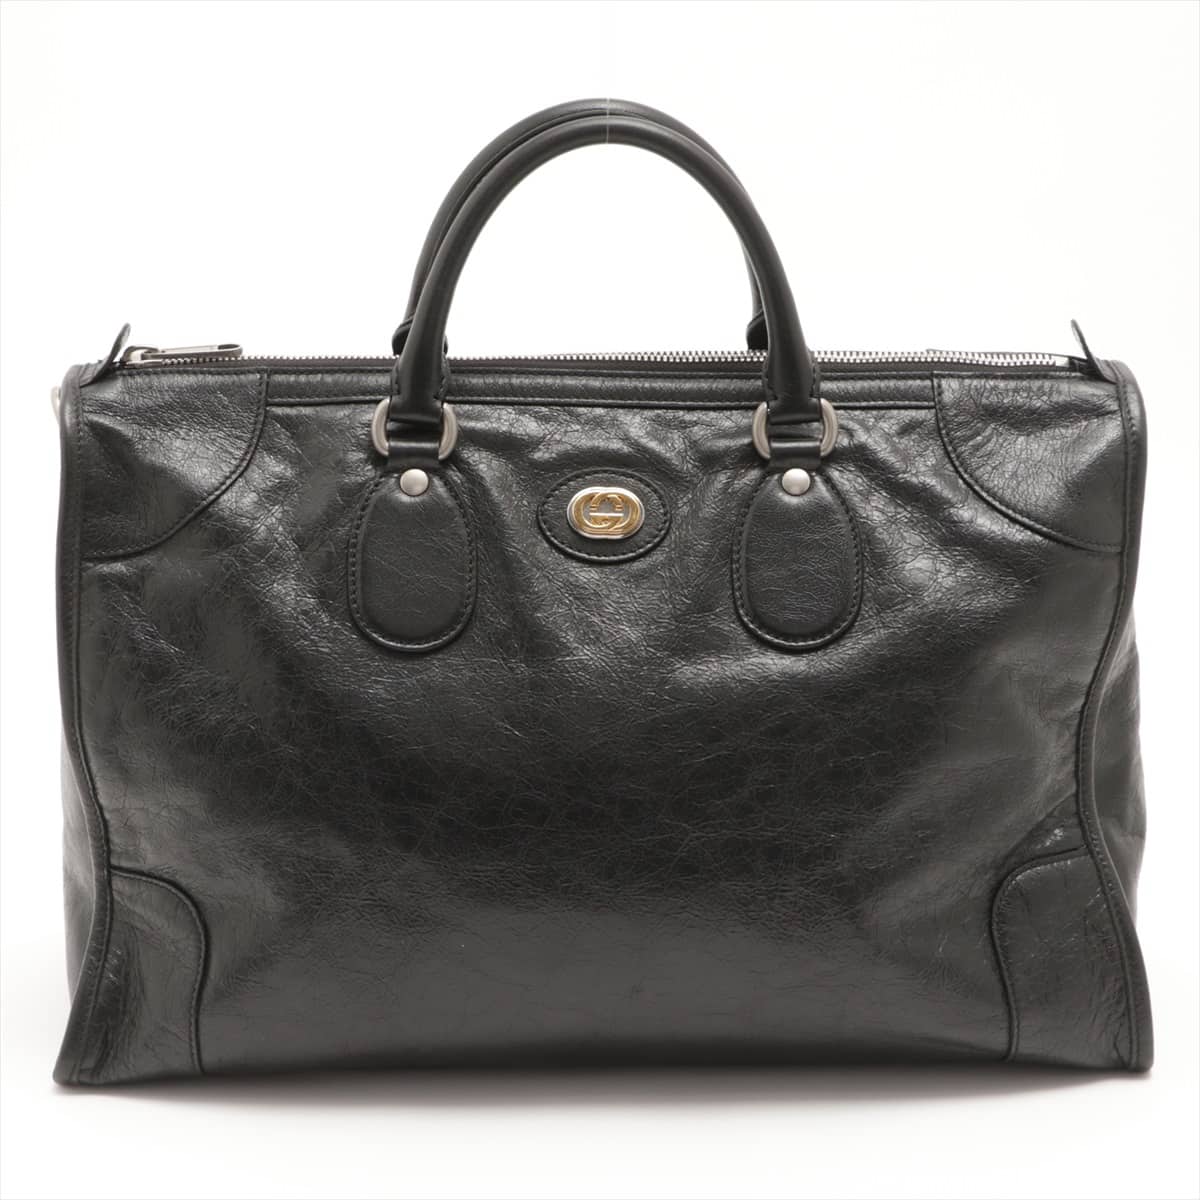 Gucci Leather 2way handbag Black 575820